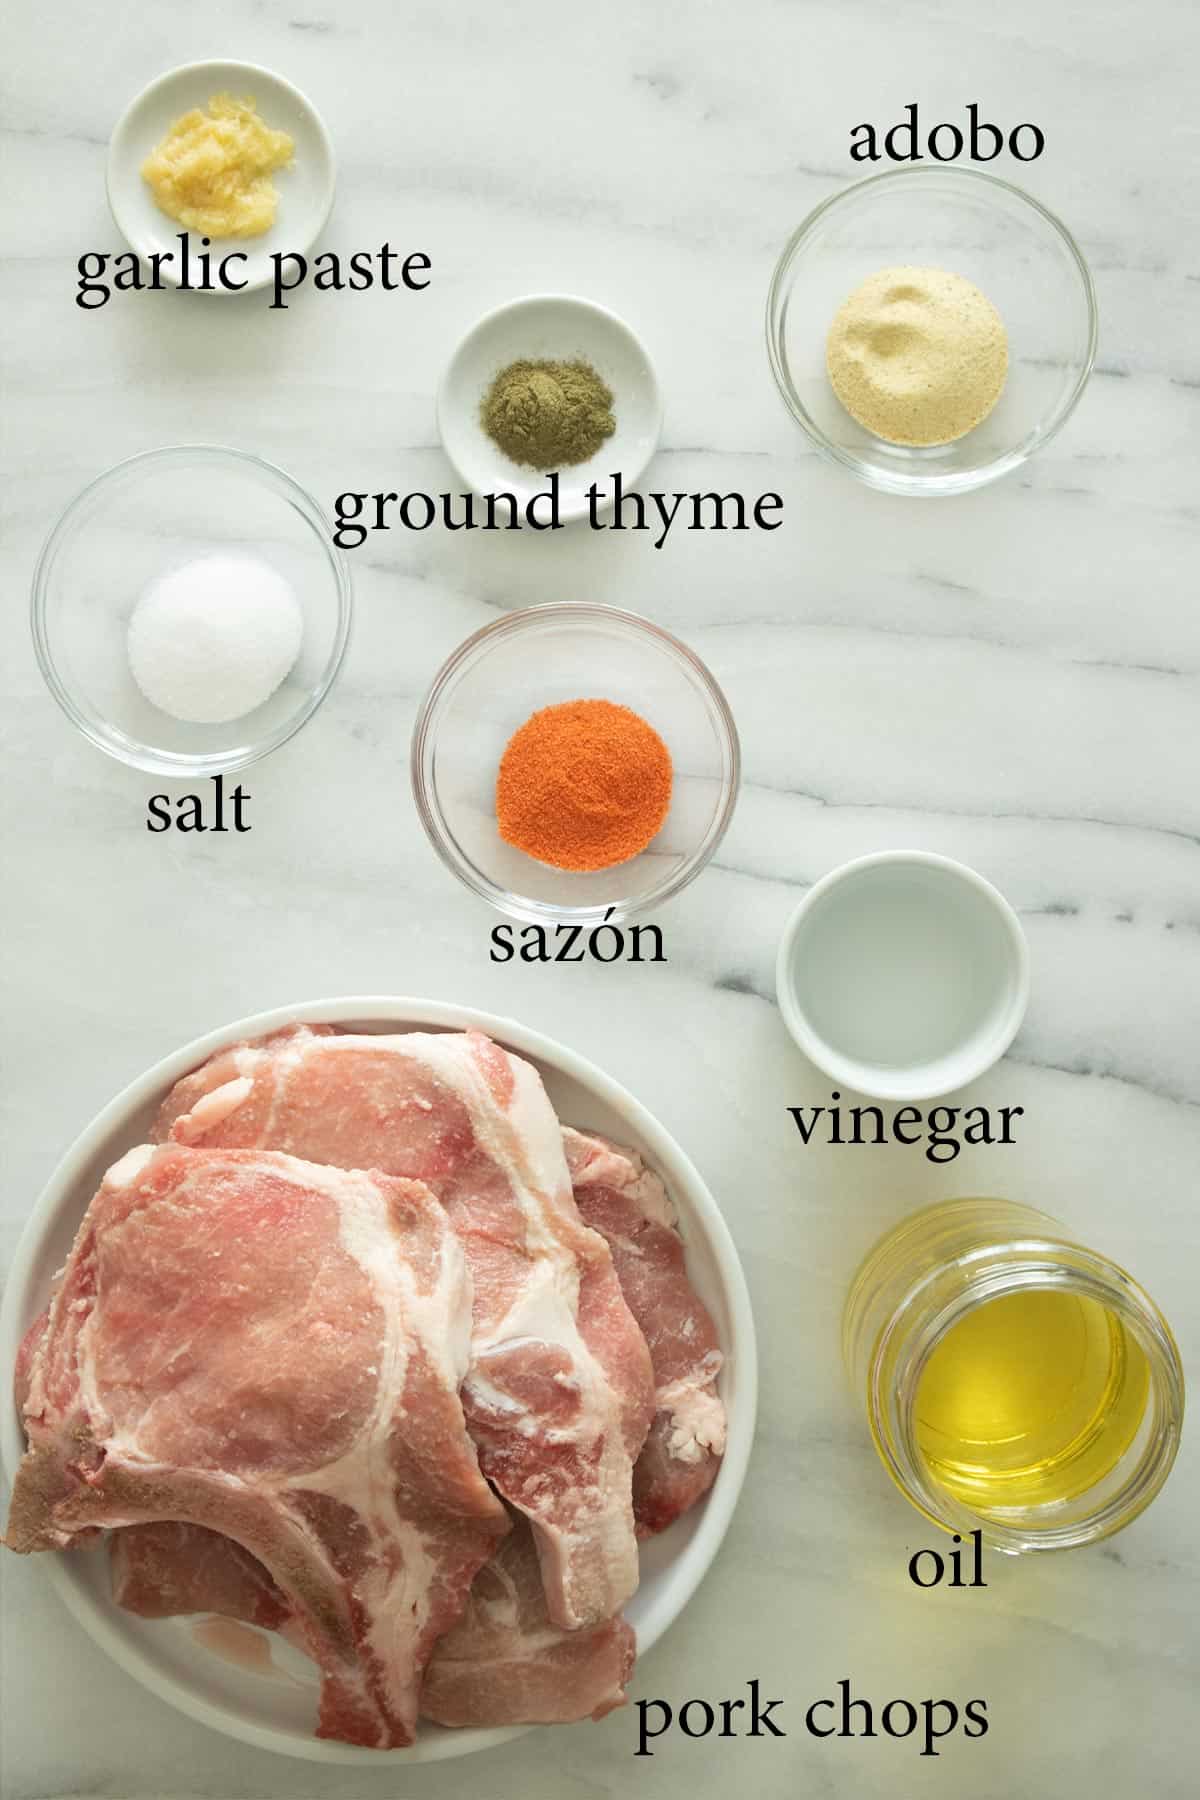 ingredients needed to make fried pork chops.